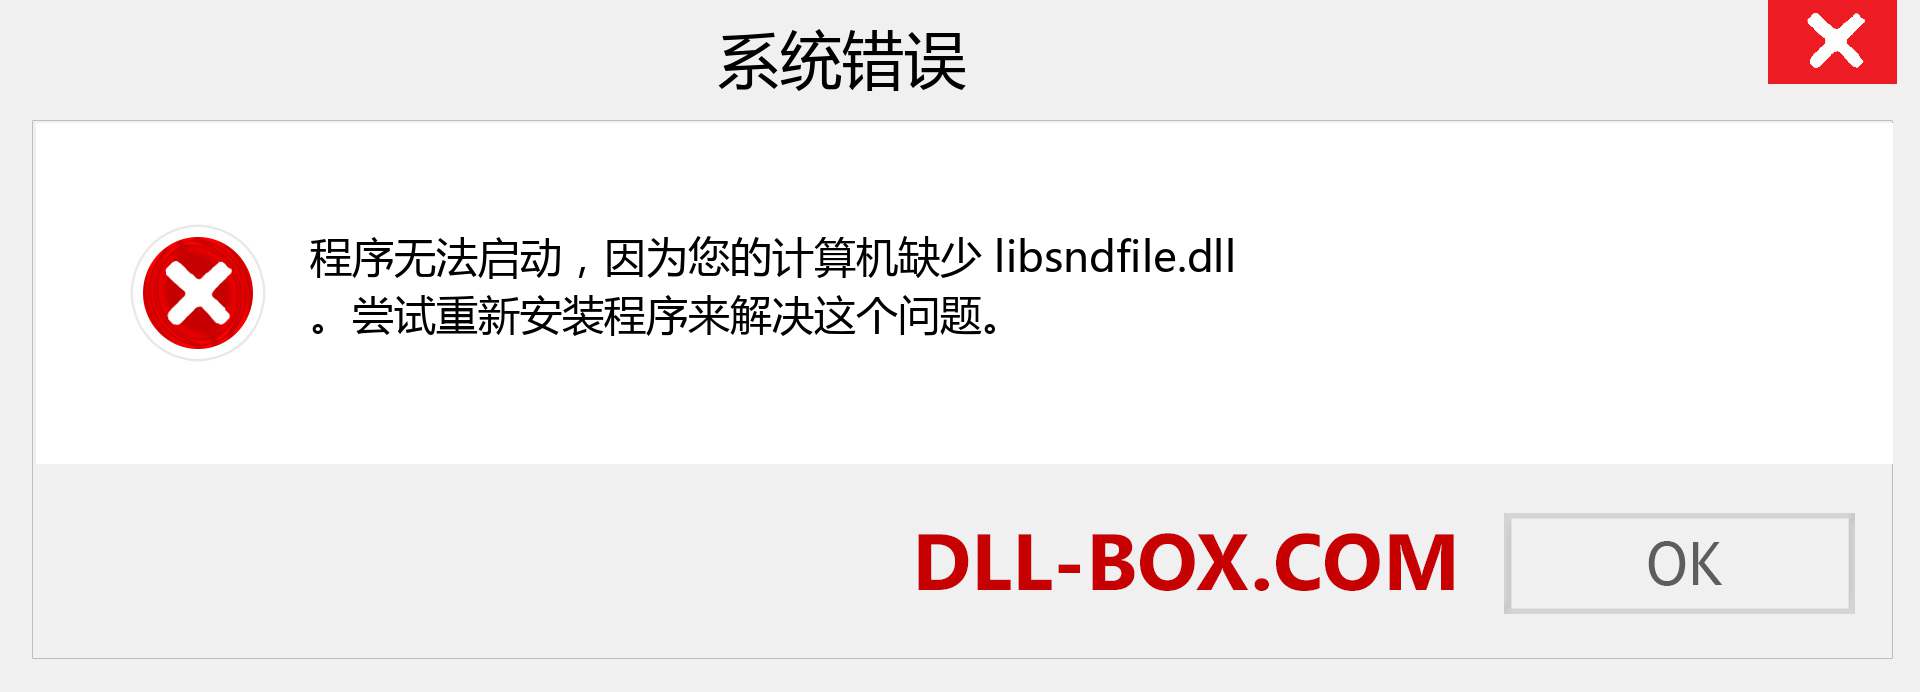 libsndfile.dll 文件丢失？。 适用于 Windows 7、8、10 的下载 - 修复 Windows、照片、图像上的 libsndfile dll 丢失错误